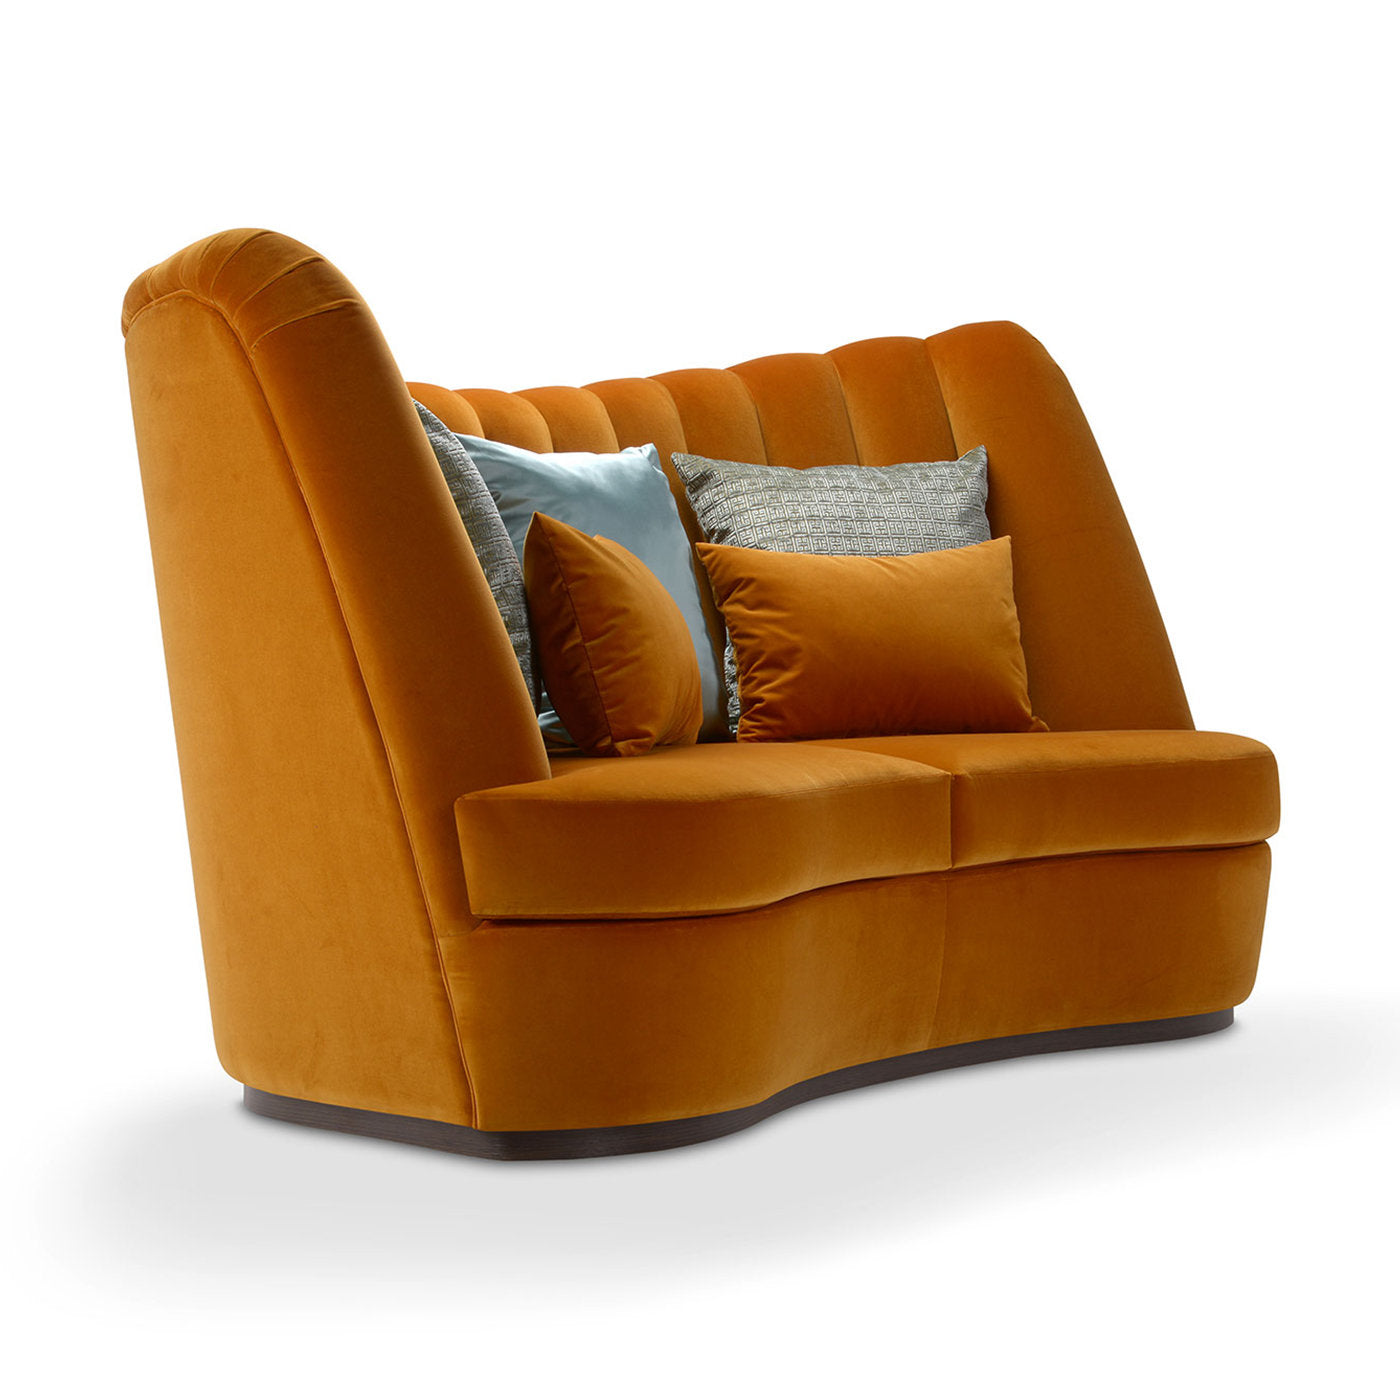 Thalia Saffron 3-Seater Sofa - Alternative view 2